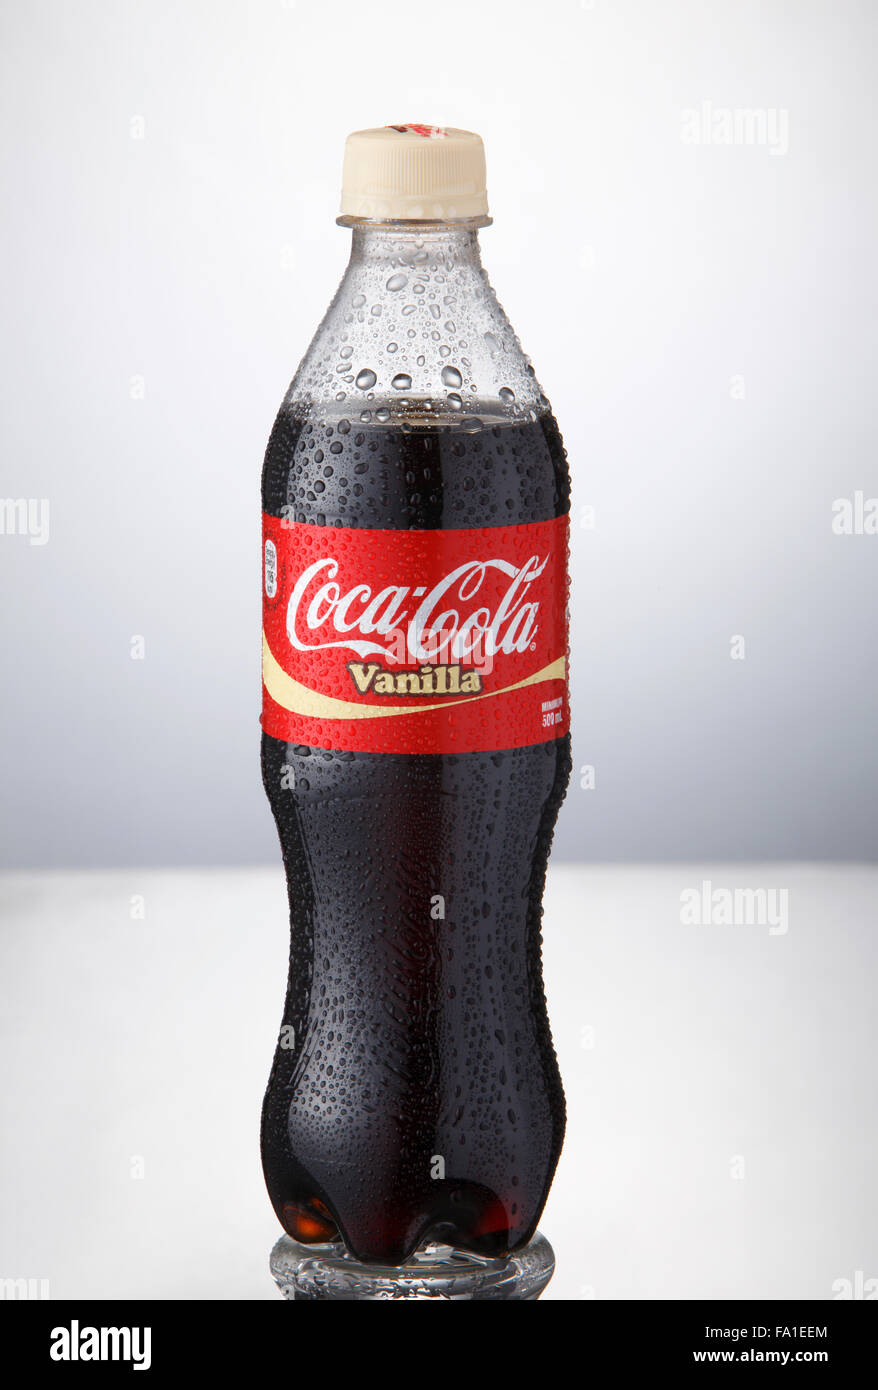 Coke de vanille Stock Photos, Royalty Free Coke de vanille Images